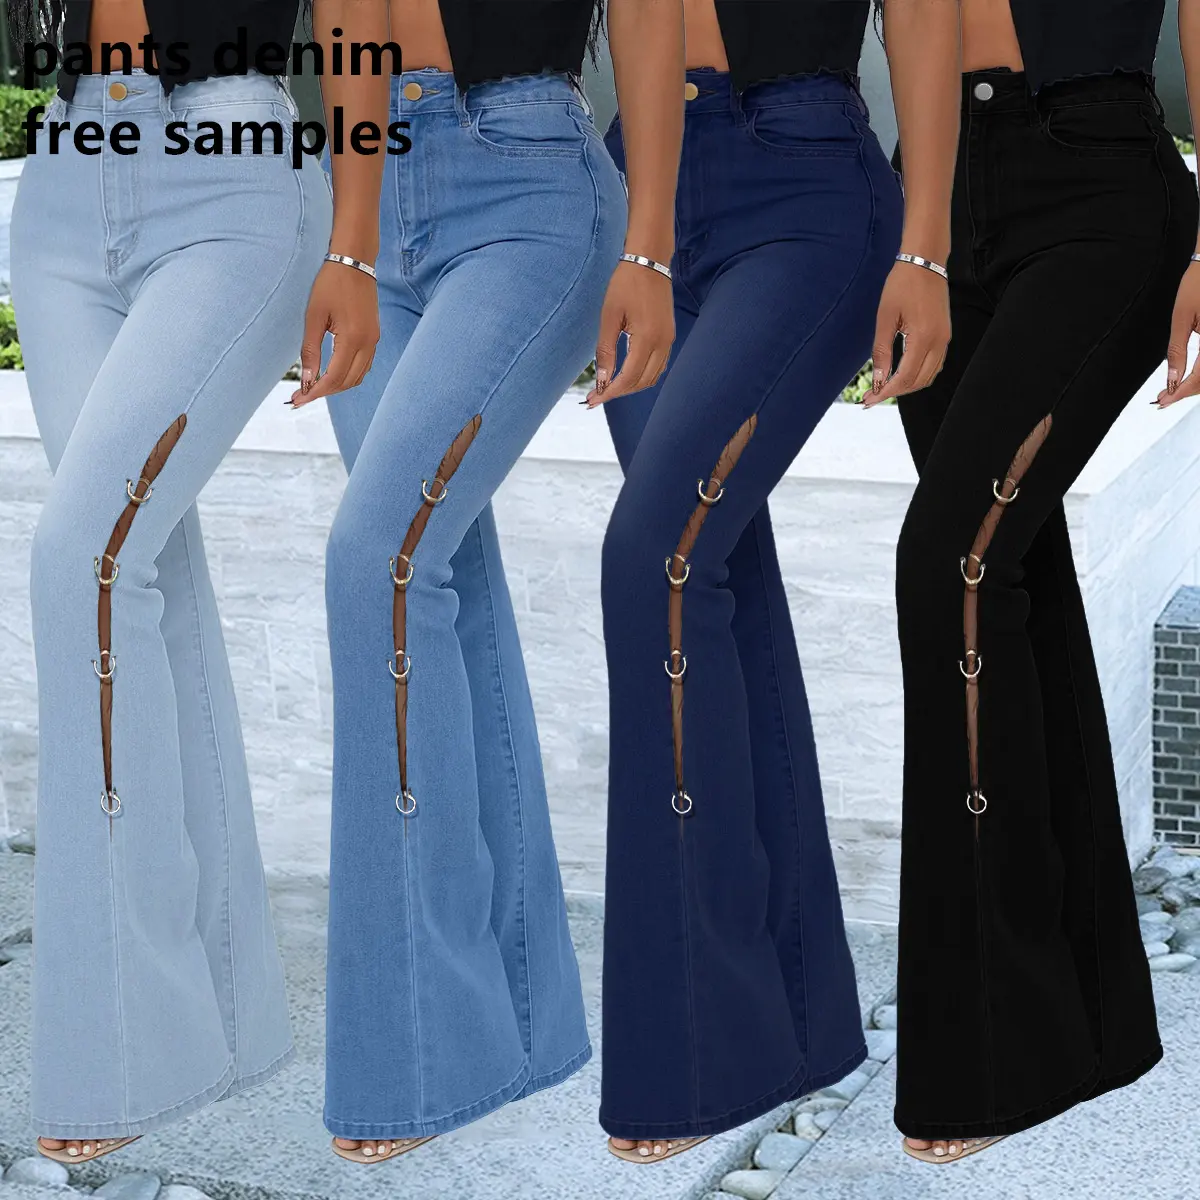 2022 Dropshipping סיטונאי חדש סגנון נשים אופנה מתכת קישוט התלקחות נשים ג 'ינס מכנסיים ג' ינס עבור גברת